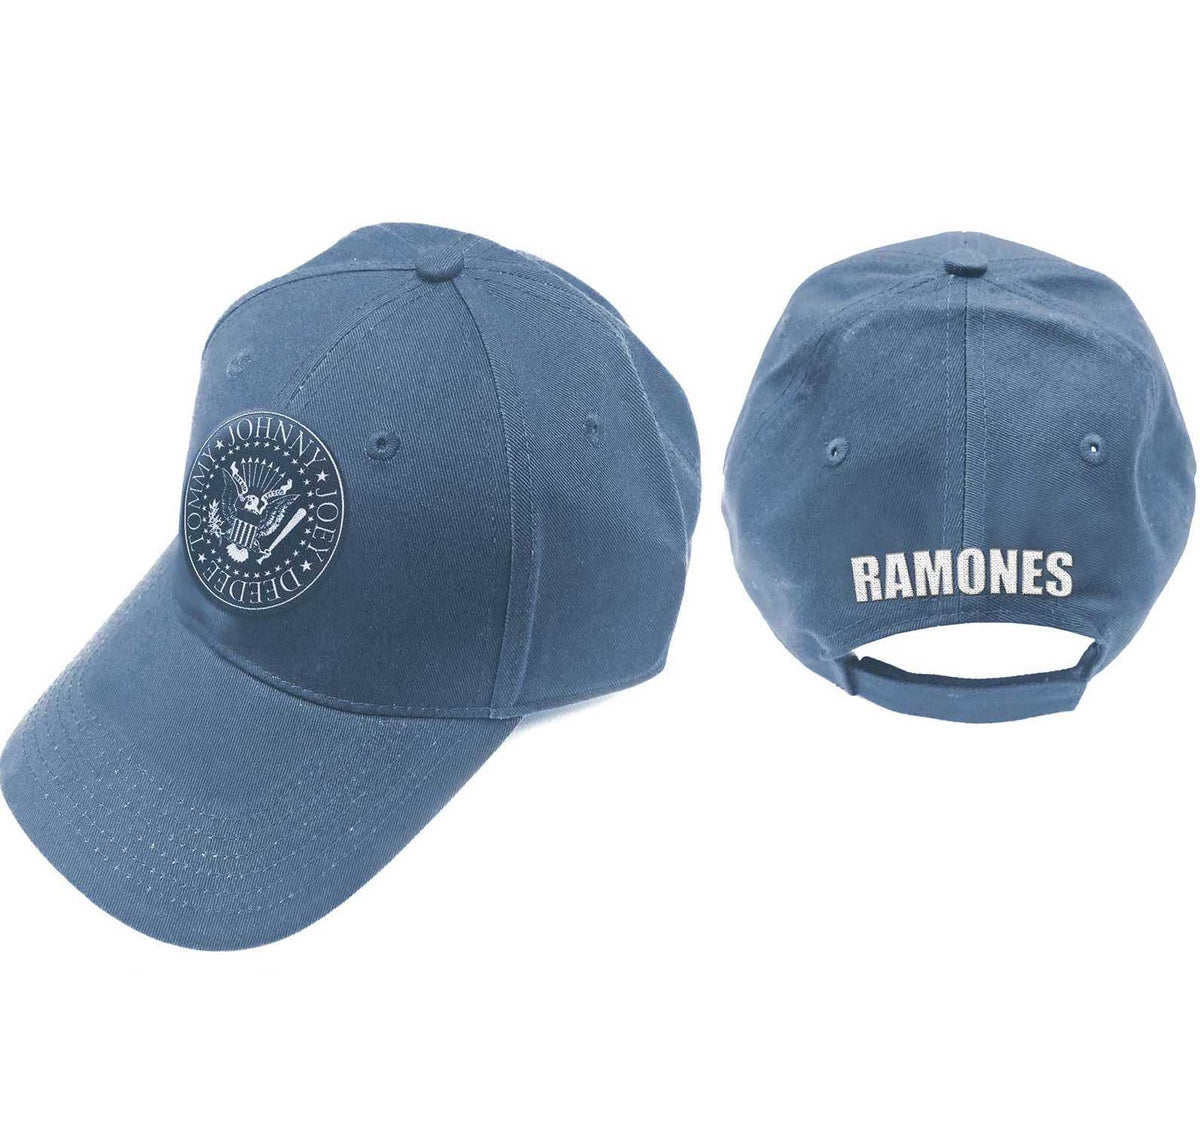 Ramones Unisex Baseball Cap - Presidential Seal - Denim Blue - Official Product